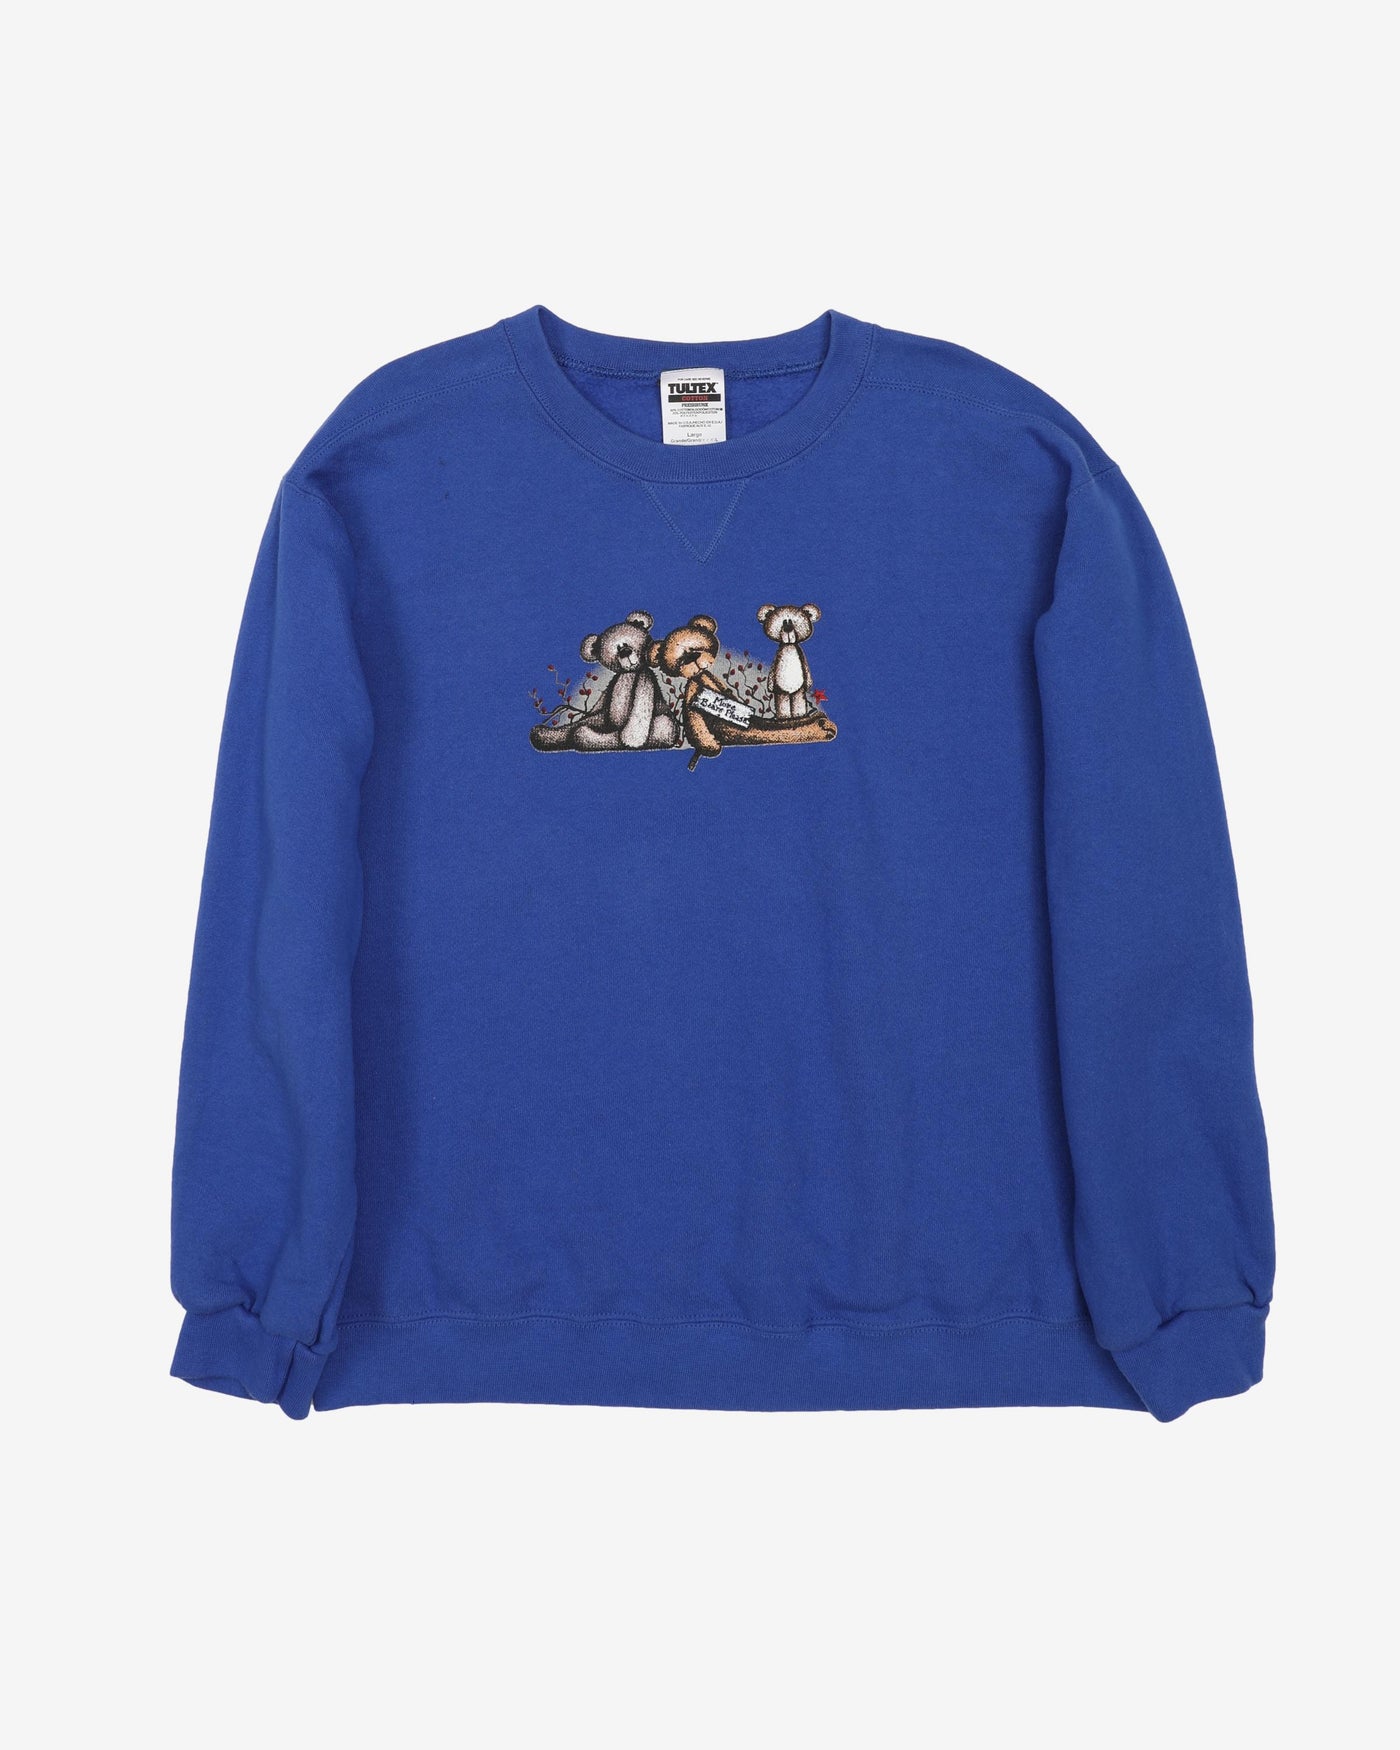 Vintage 90s More Bears Please Royal Blue Tultex Sweatshirt - L